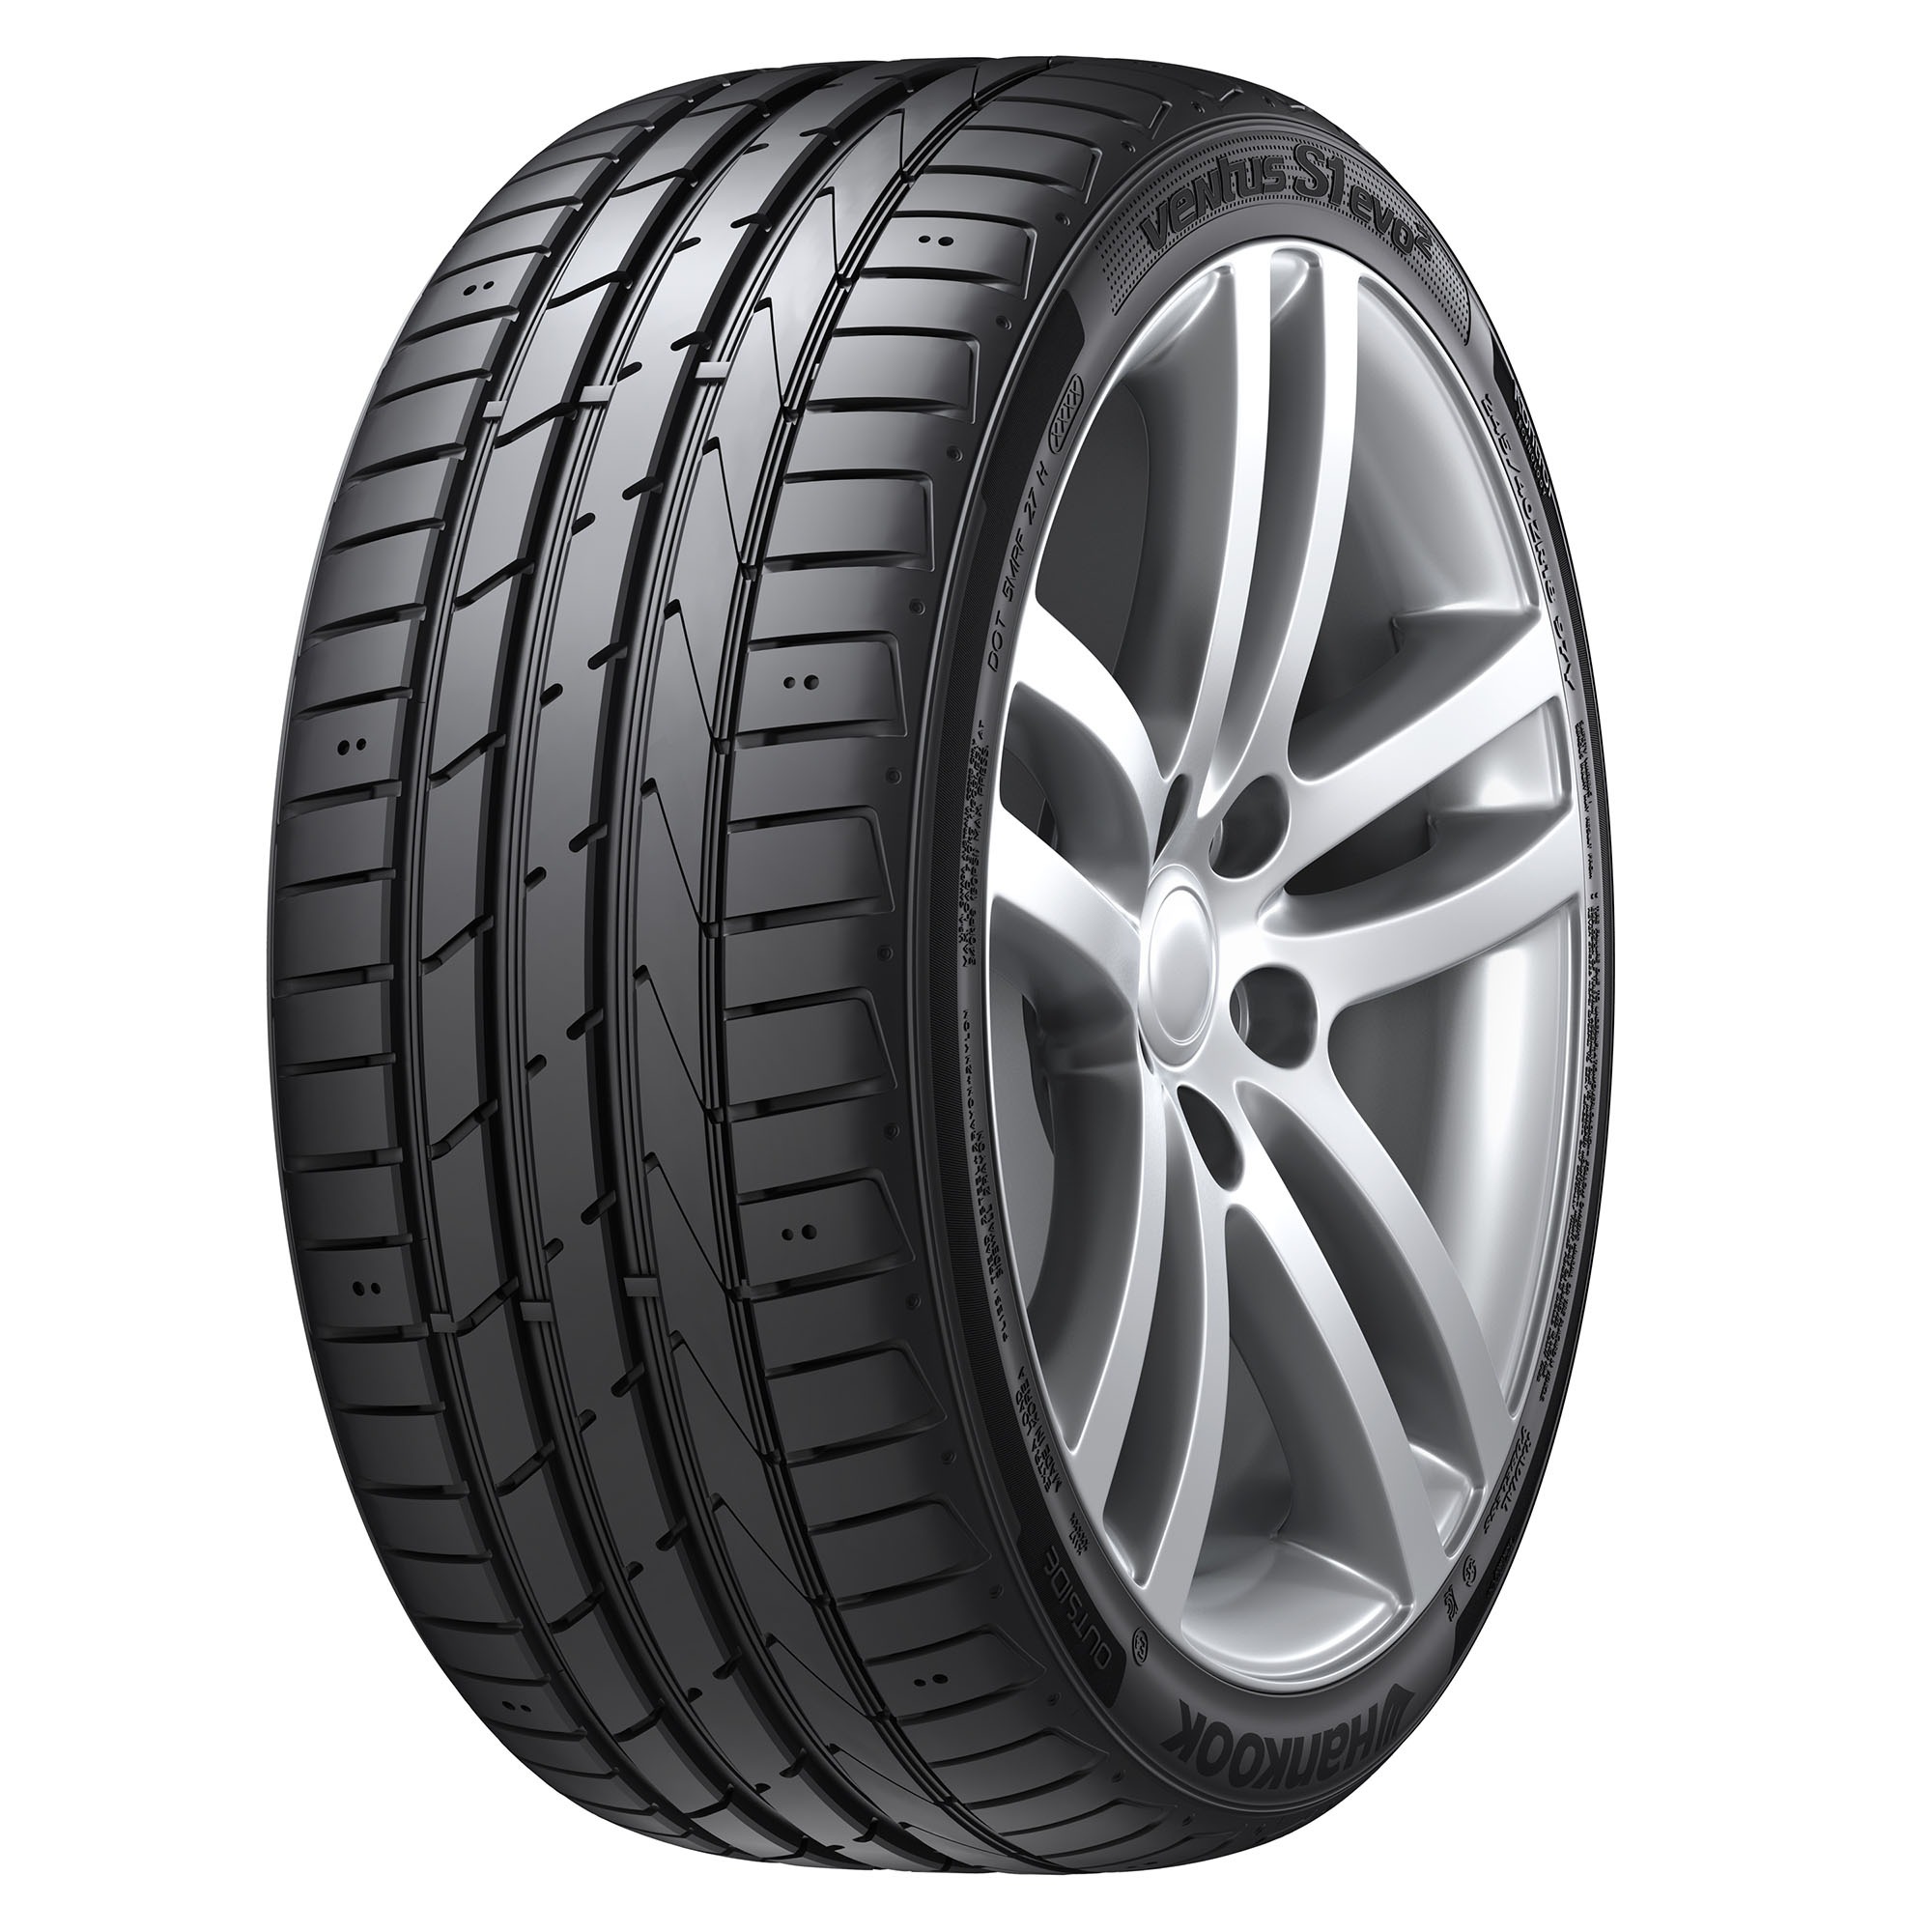 Car Goodyear Tire - Mechanic WordPress Theme